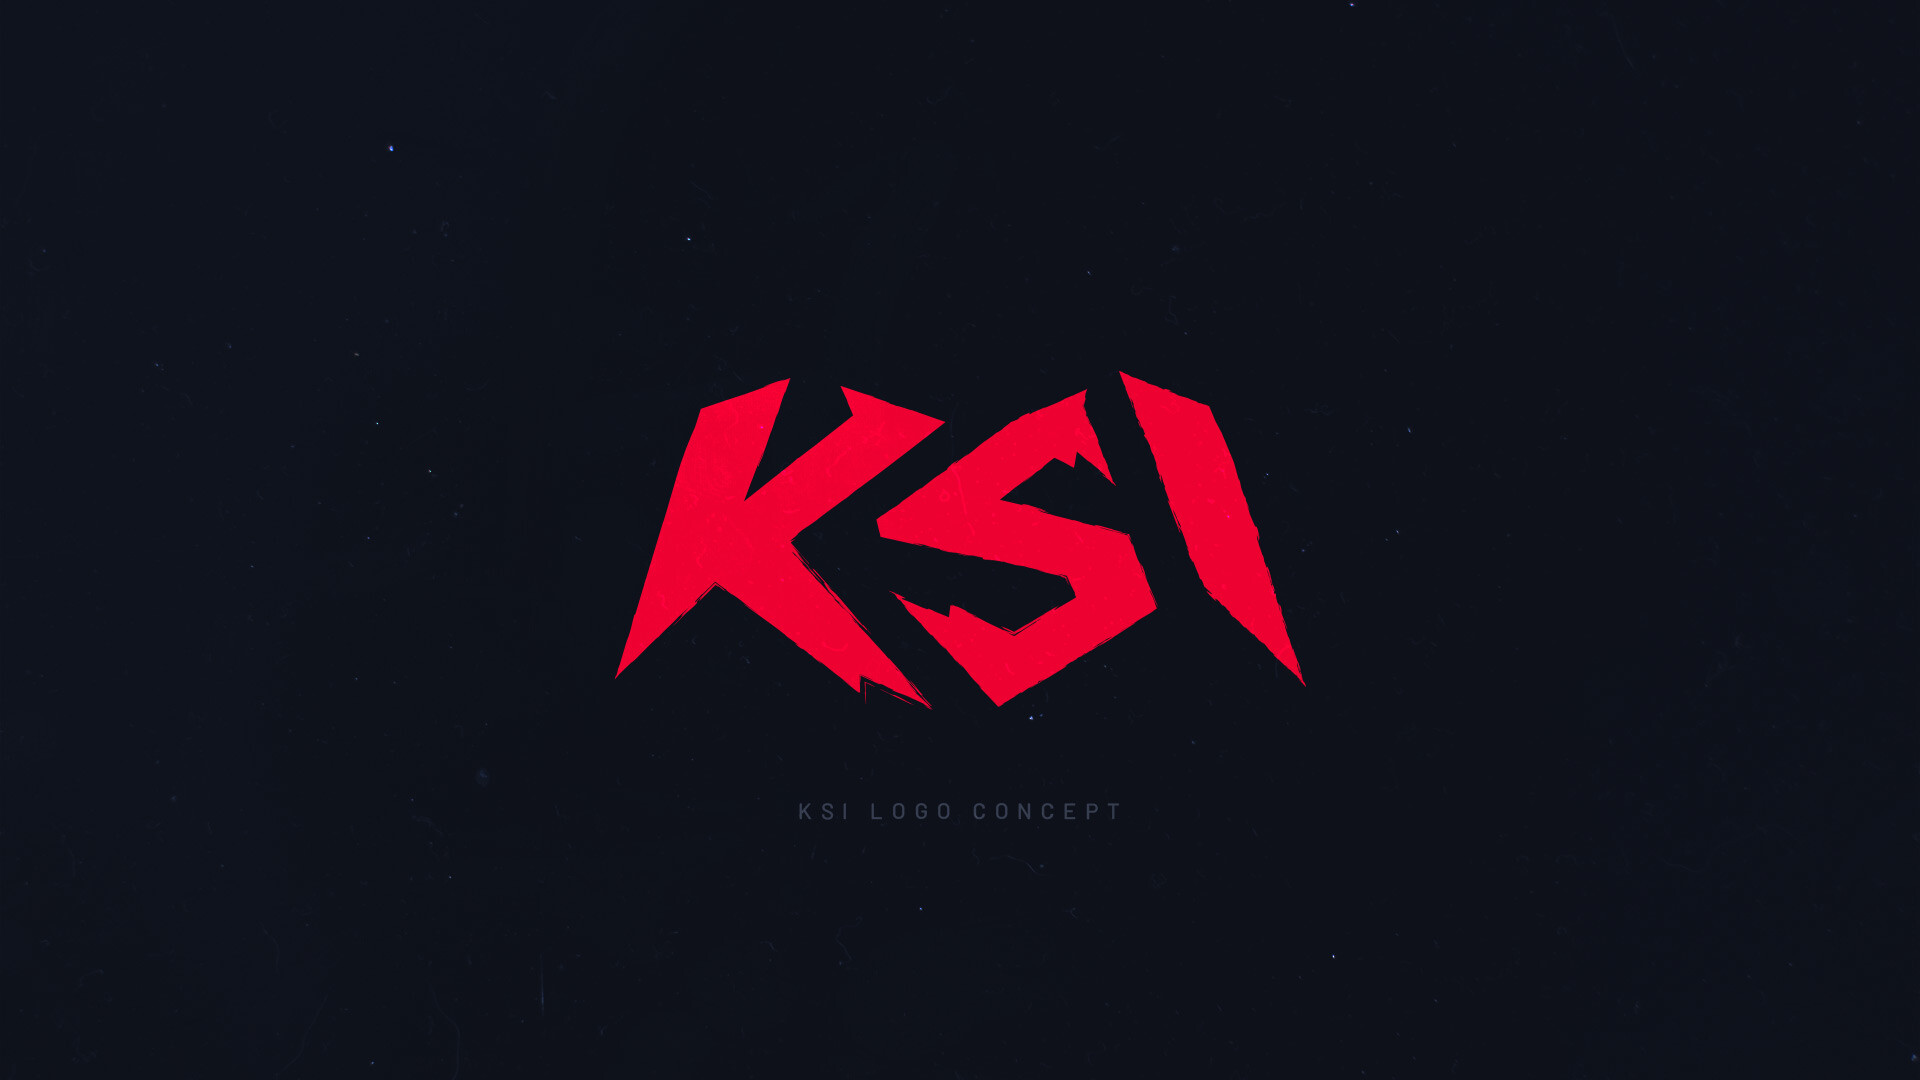 KSI redesigned Sidemen logos, Creative graphic design, Logo revamp, Unique branding, 1920x1080 Full HD Desktop